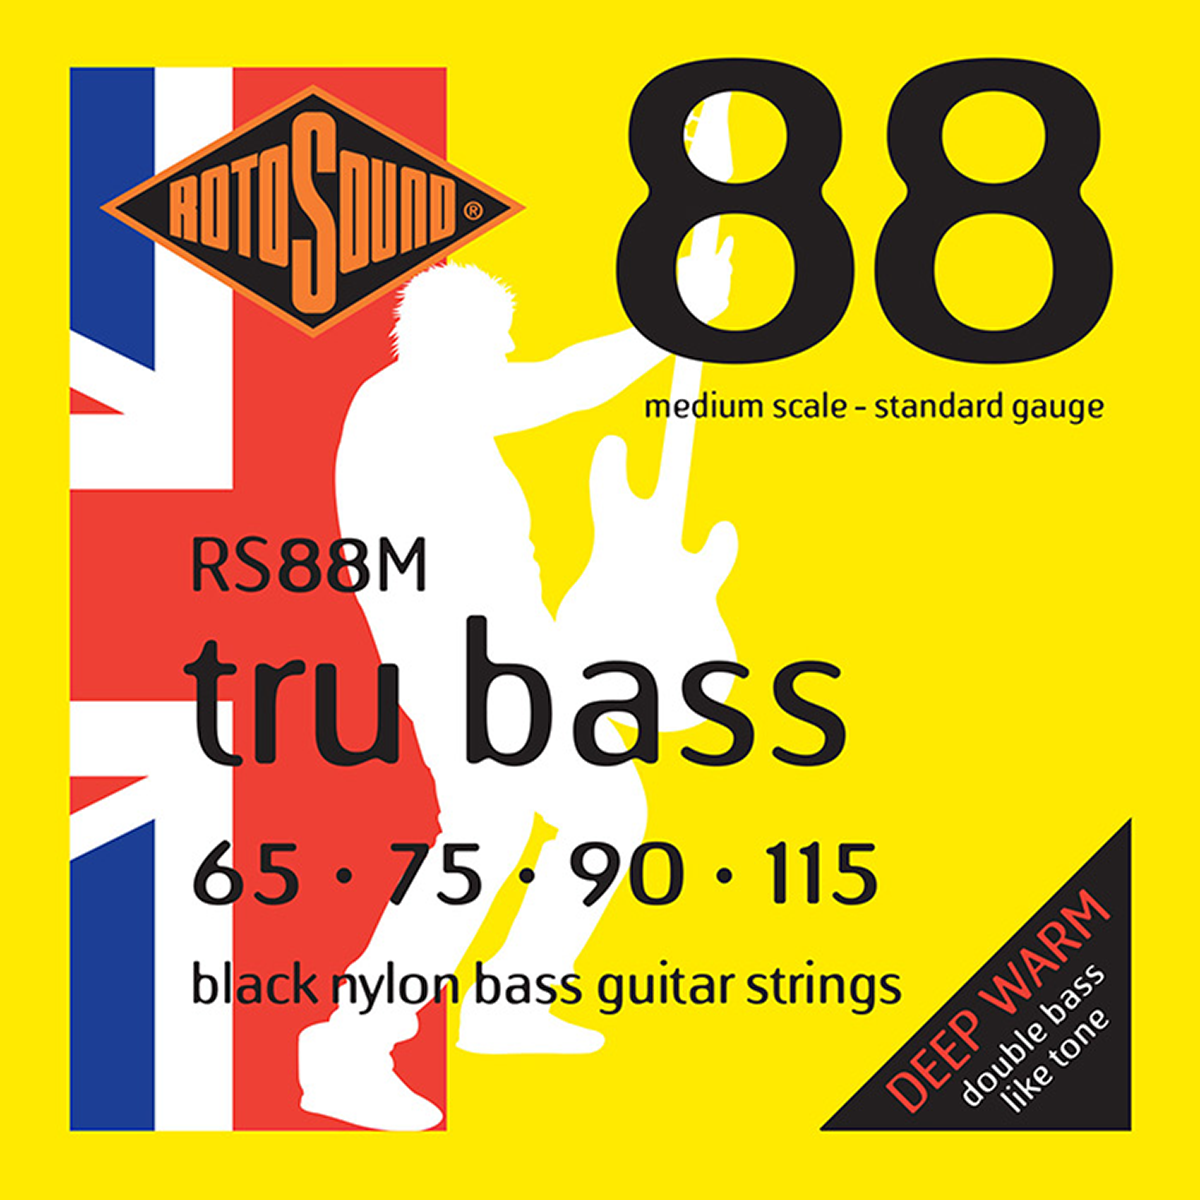 Rotosound RS88M Tru Bass 88 Black Nylon Tapewound Standard Gauge Bass String Set 65-115 | Medium Scale